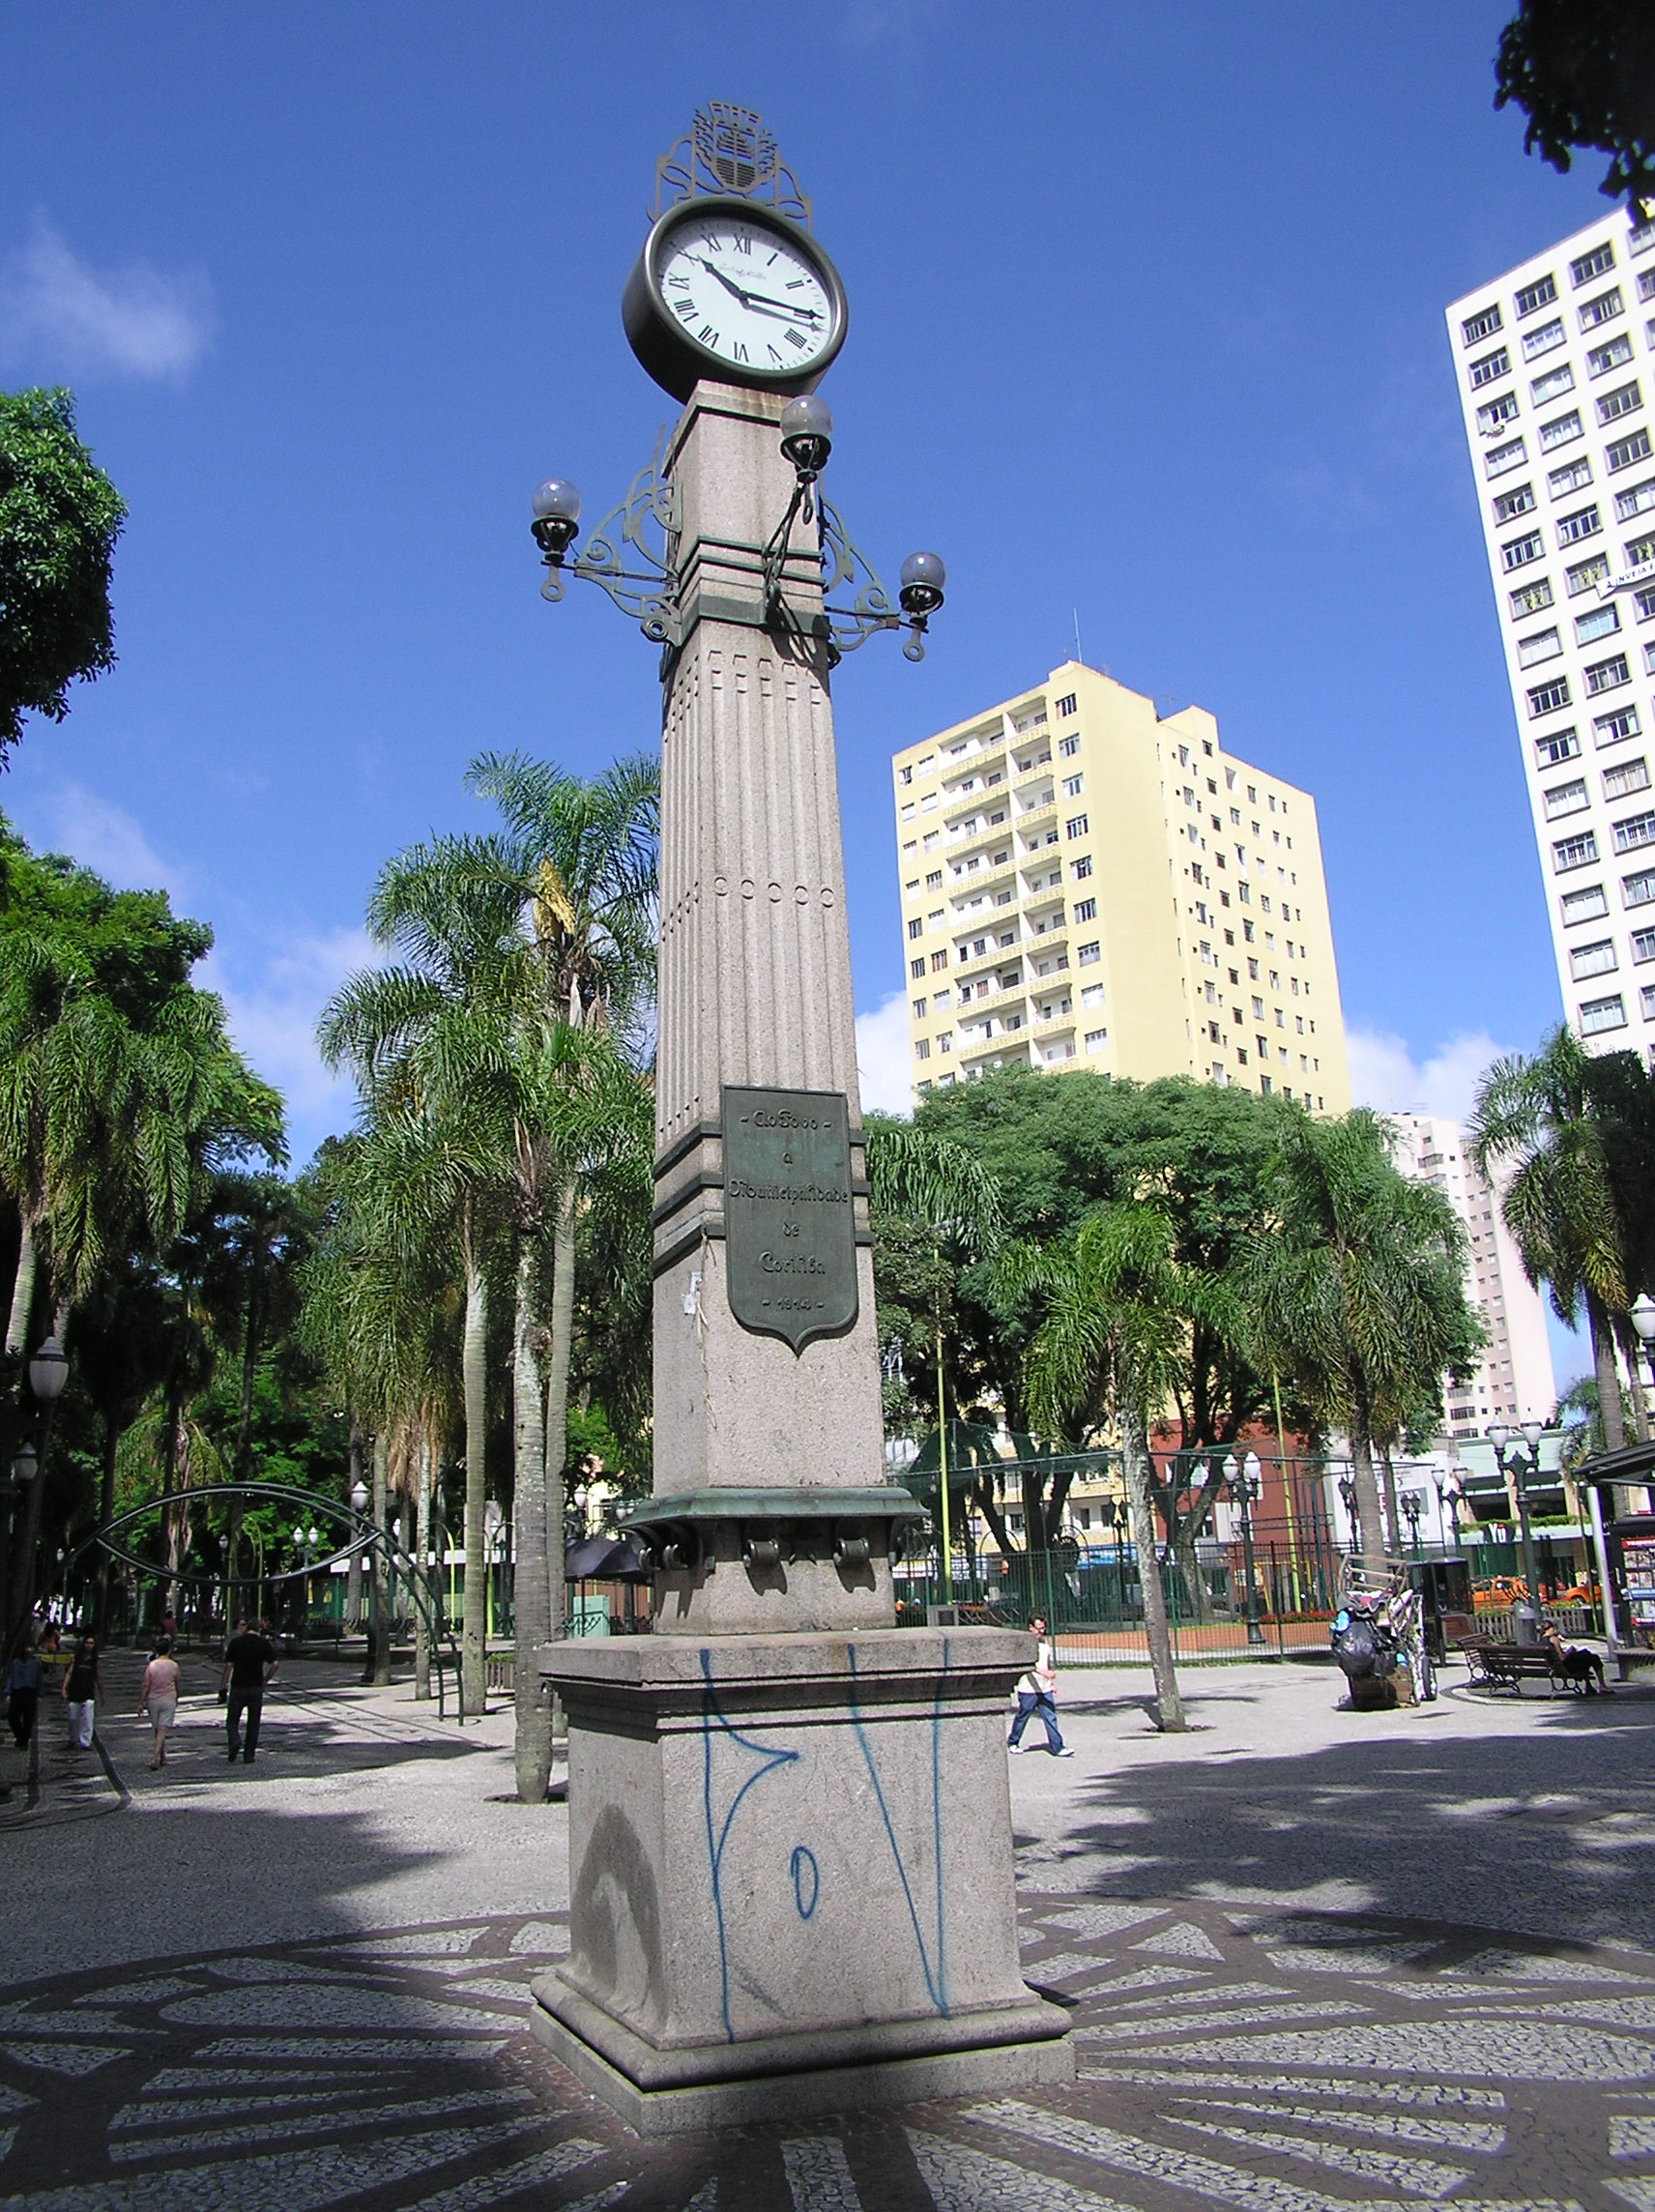 File:Clock Praca Osorio Curitiba Brasil.jpg - Wikimedia Commons